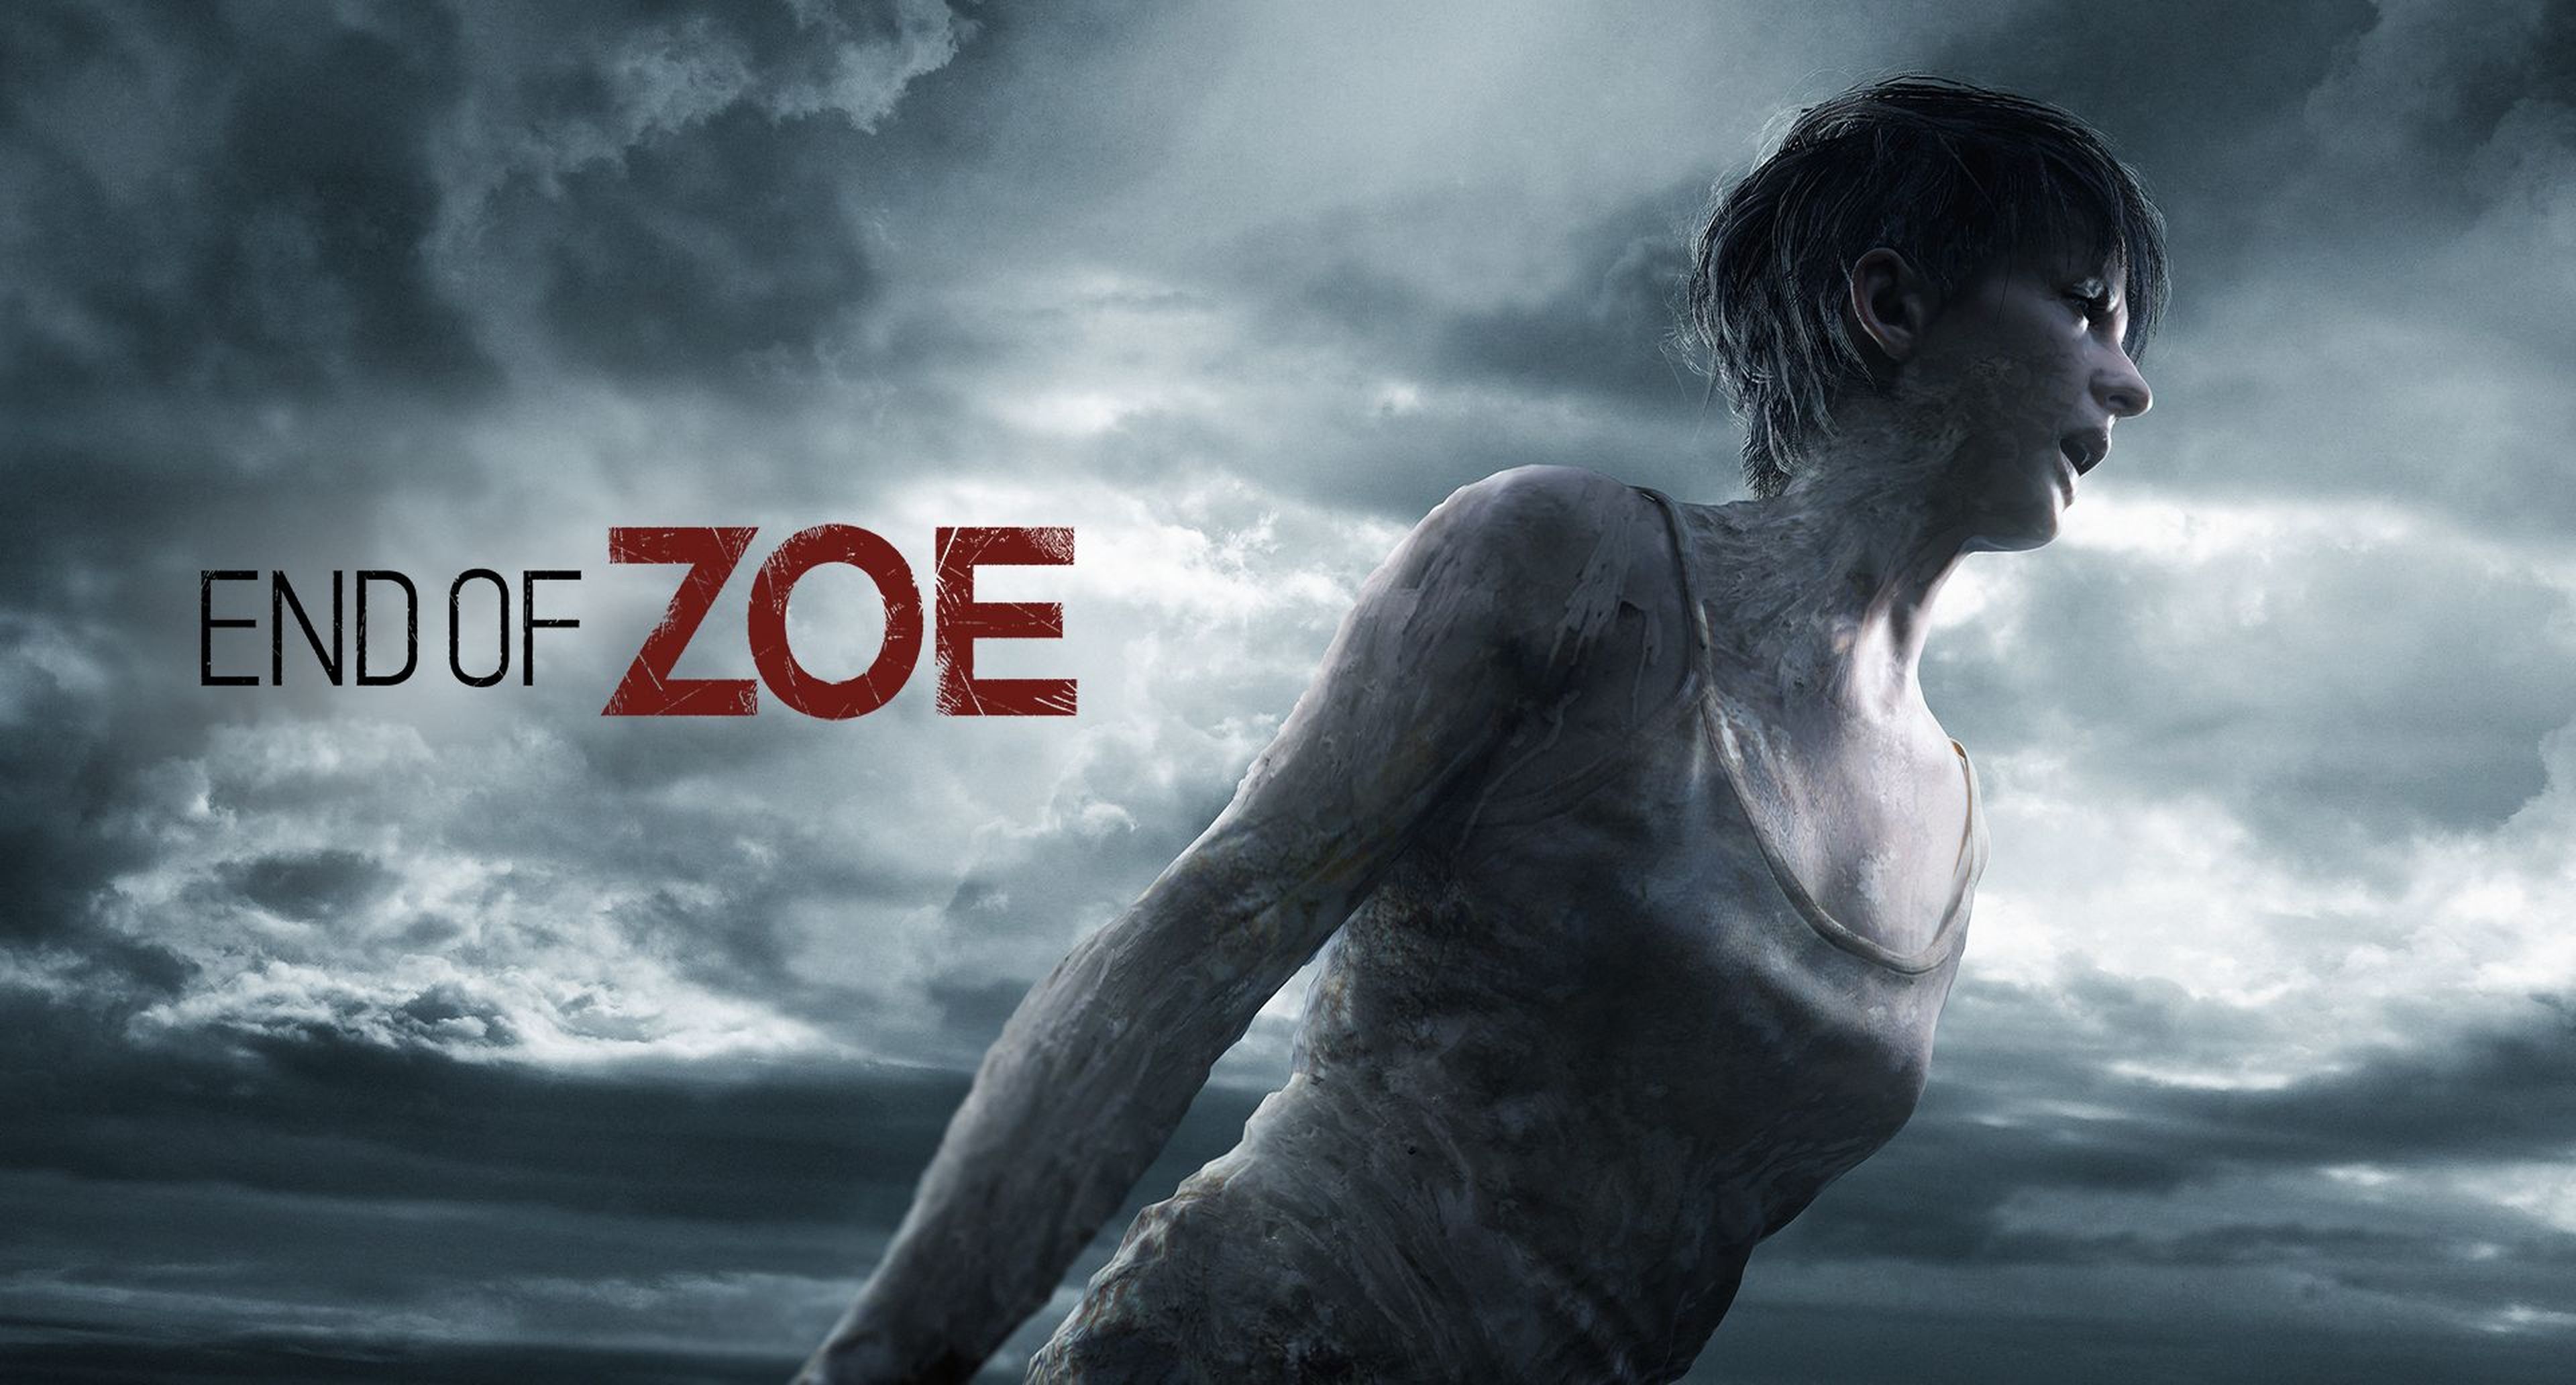 Resident Evil 7 - Imágenes de Not a Hero y End of Zoe